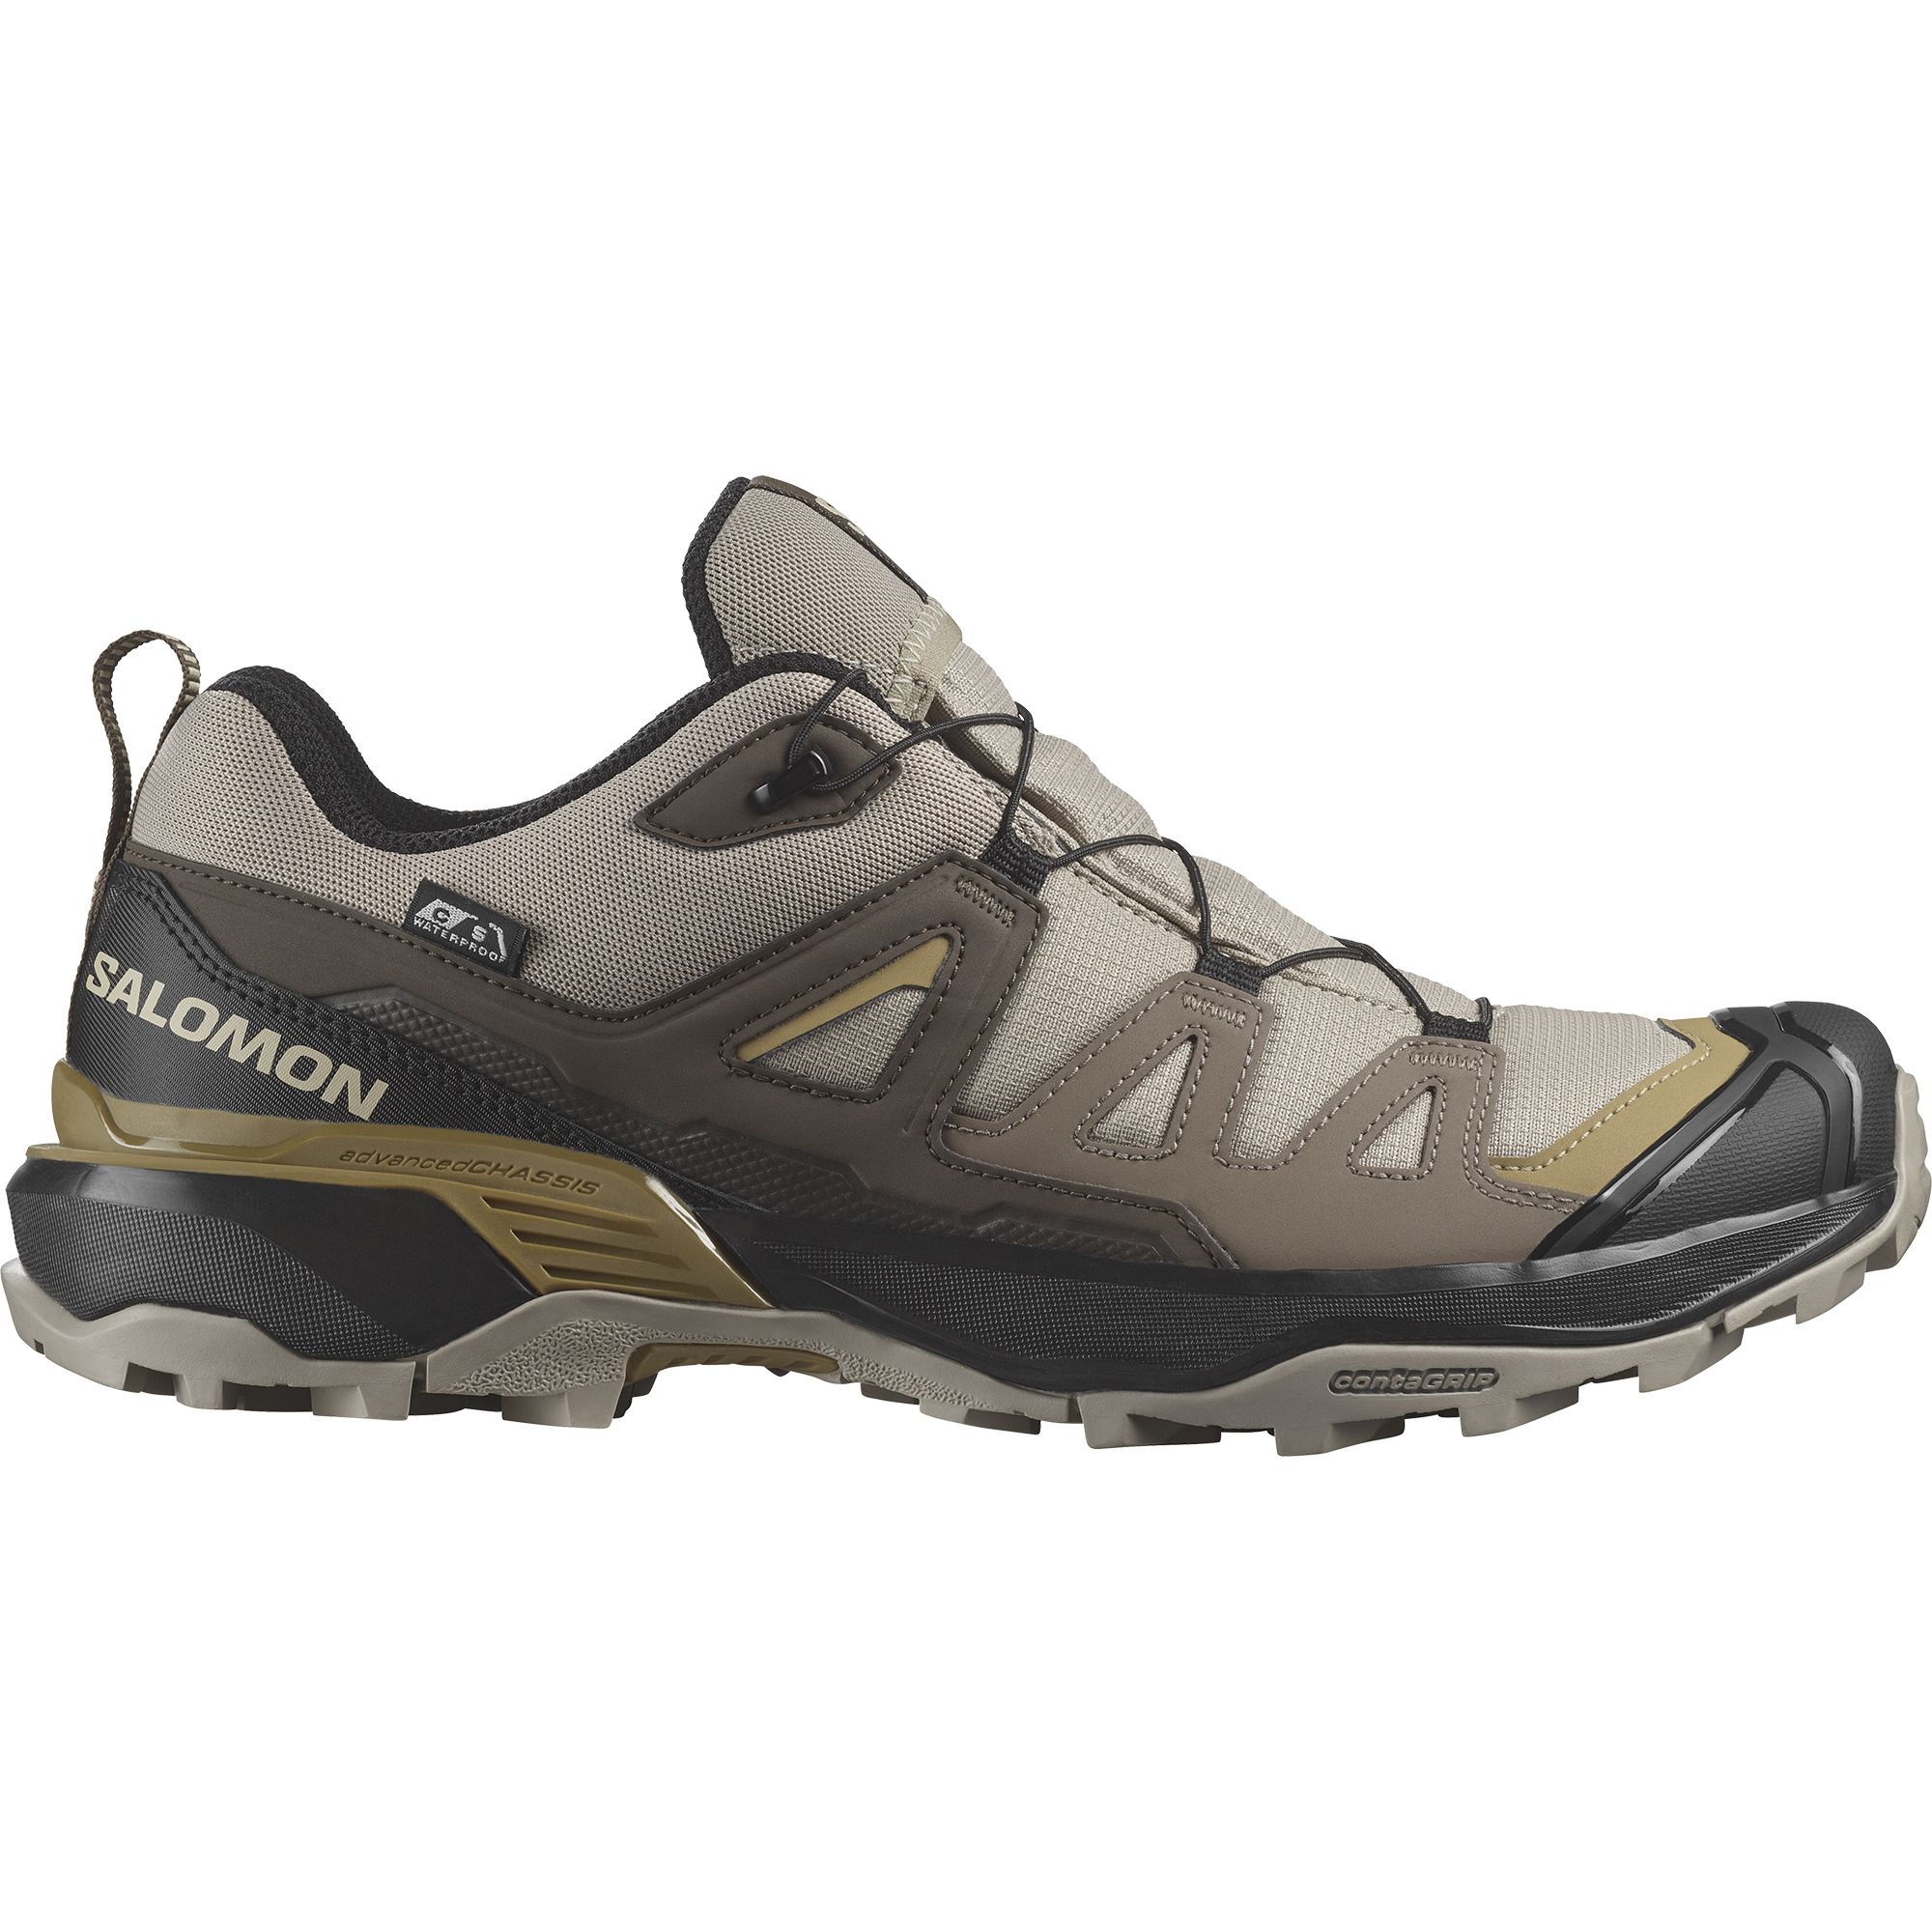 Image of Salomon Men's X Ultra 360 Cswp Hiking Shoes Waterproof All Terrain